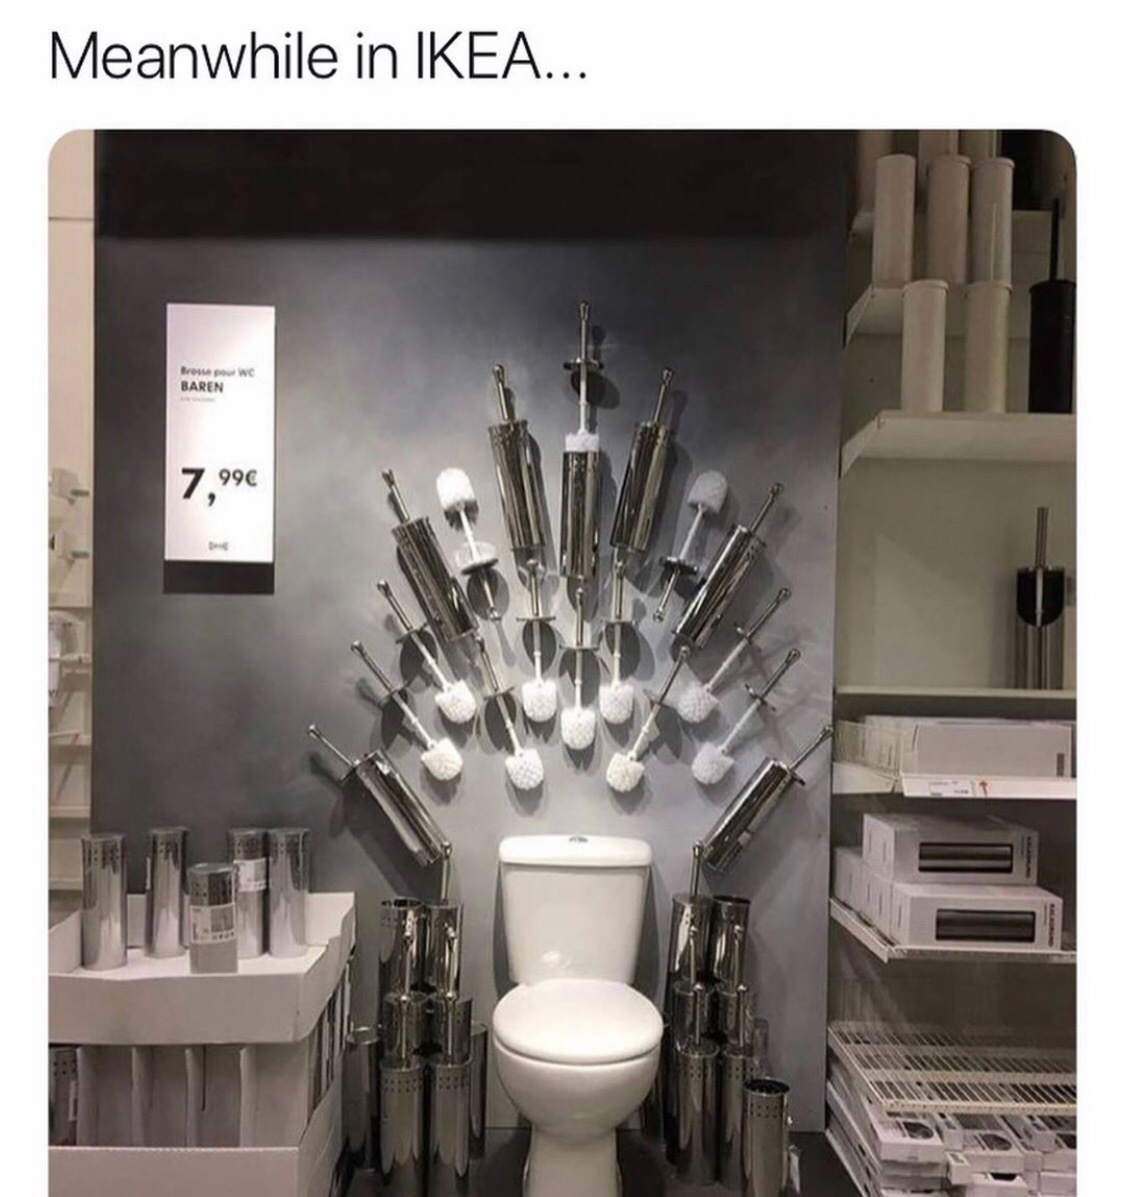 random pics - game of thrones ikea - Meanwhile in Ikea... Brose pou wc Baren 7.99